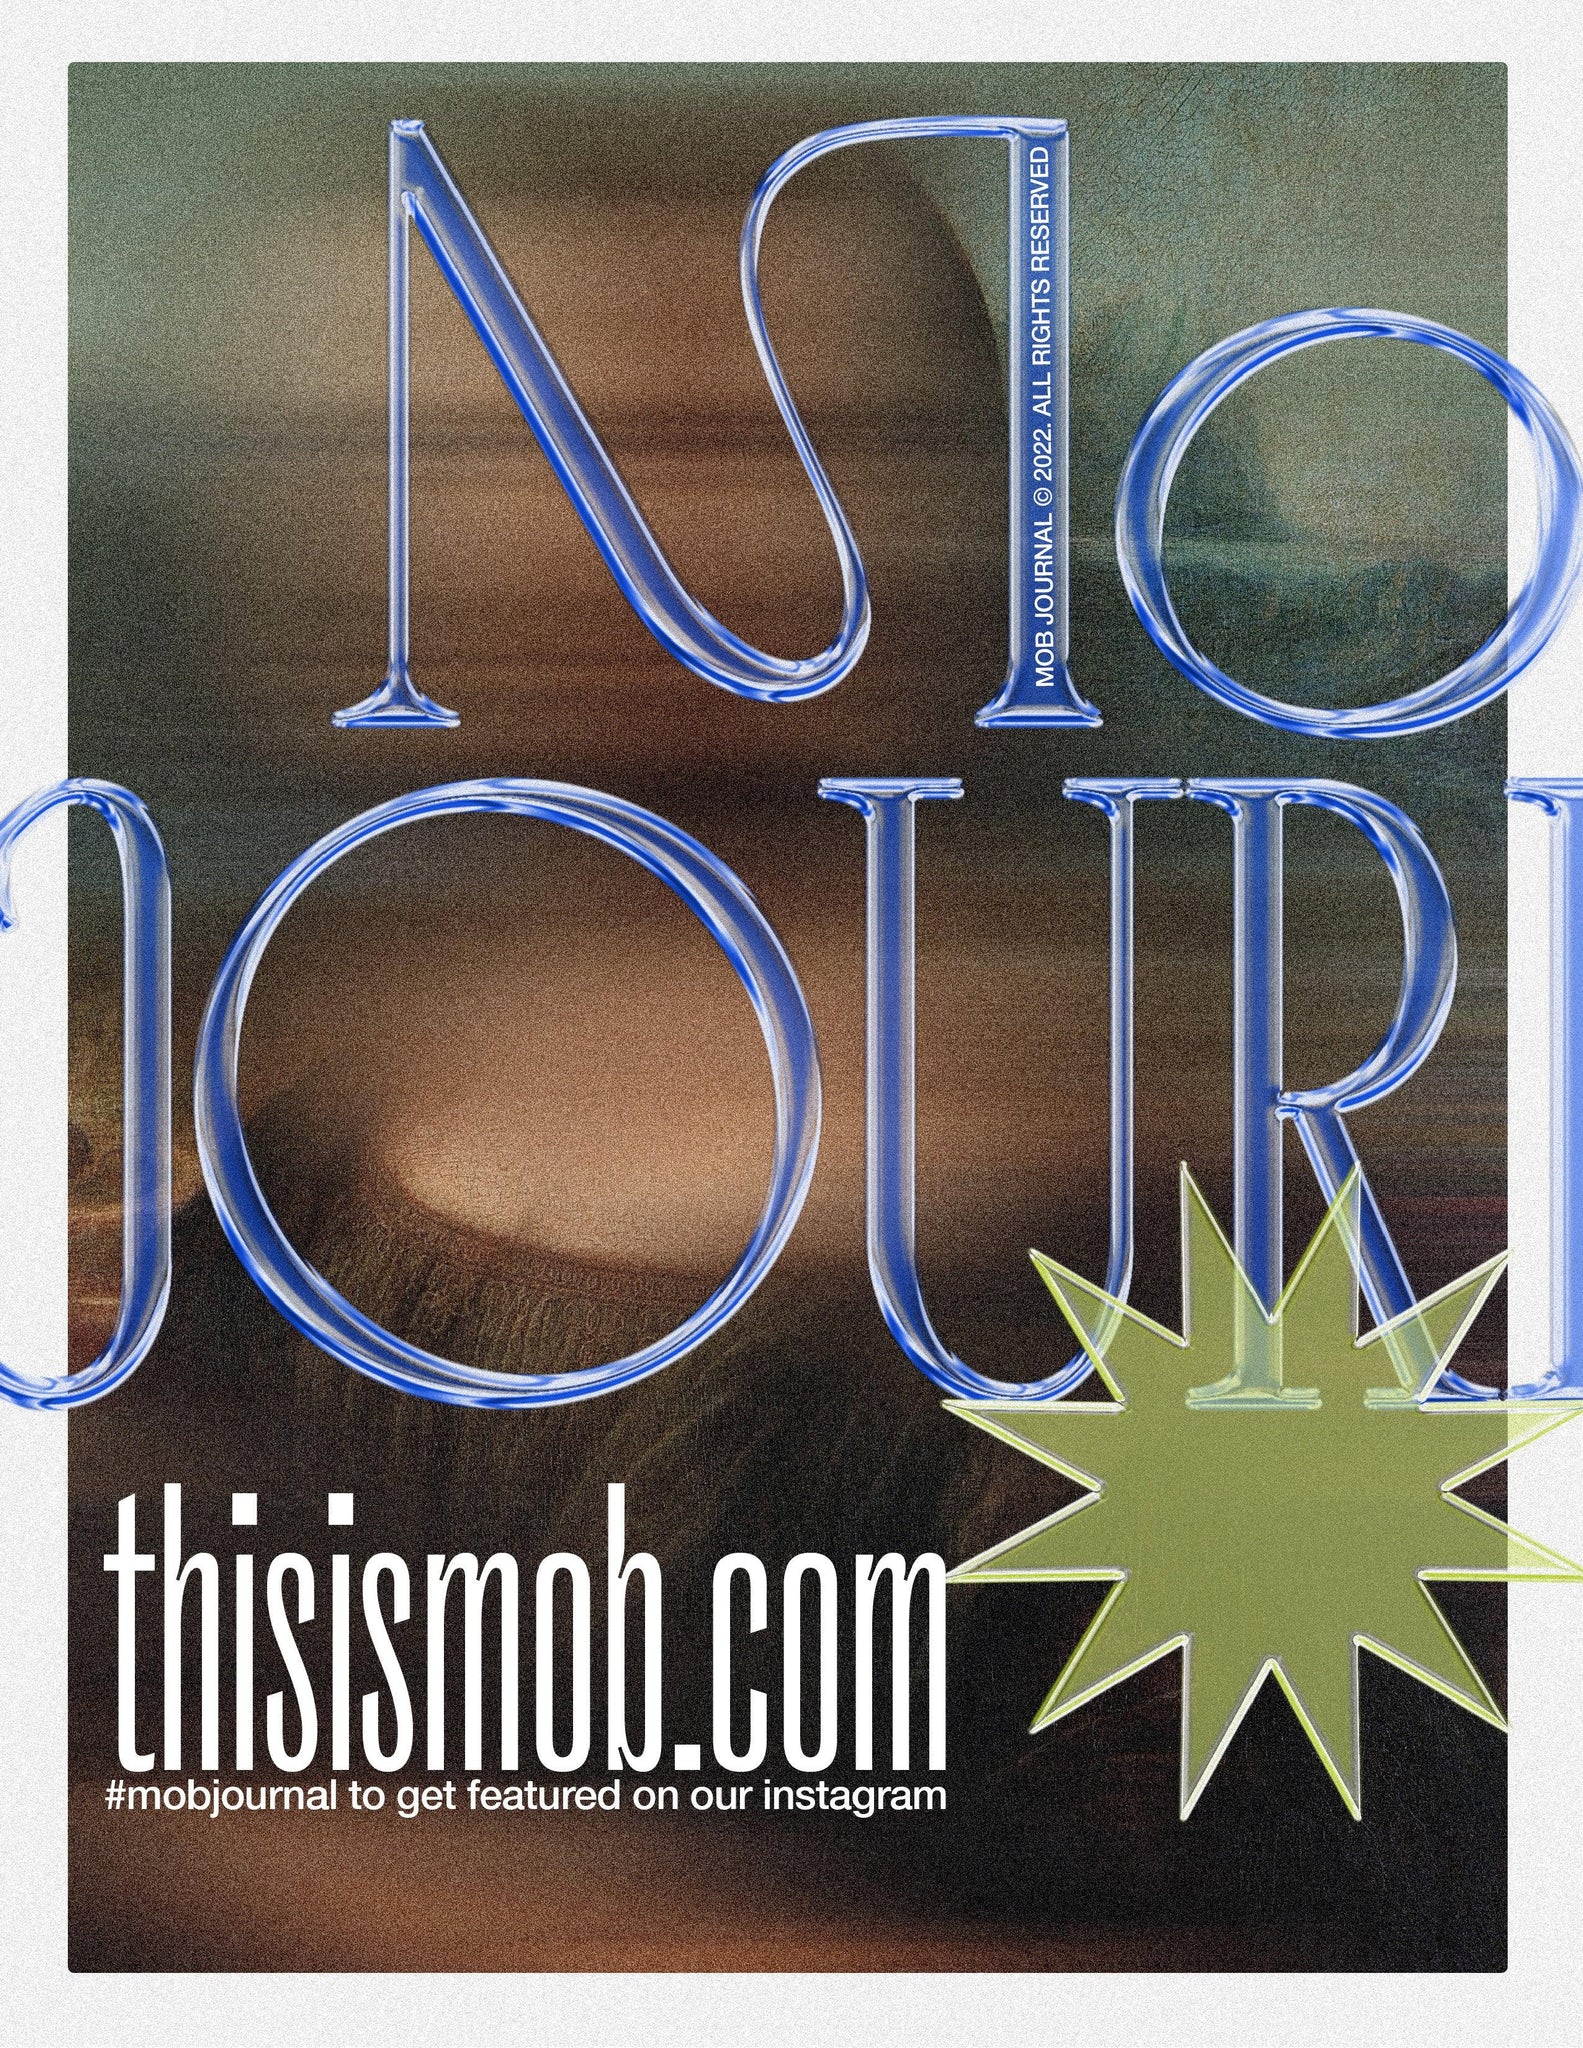 MOB JOURNAL | VOLUME TWENTY FIVE | ISSUE #42 - Mob Journal